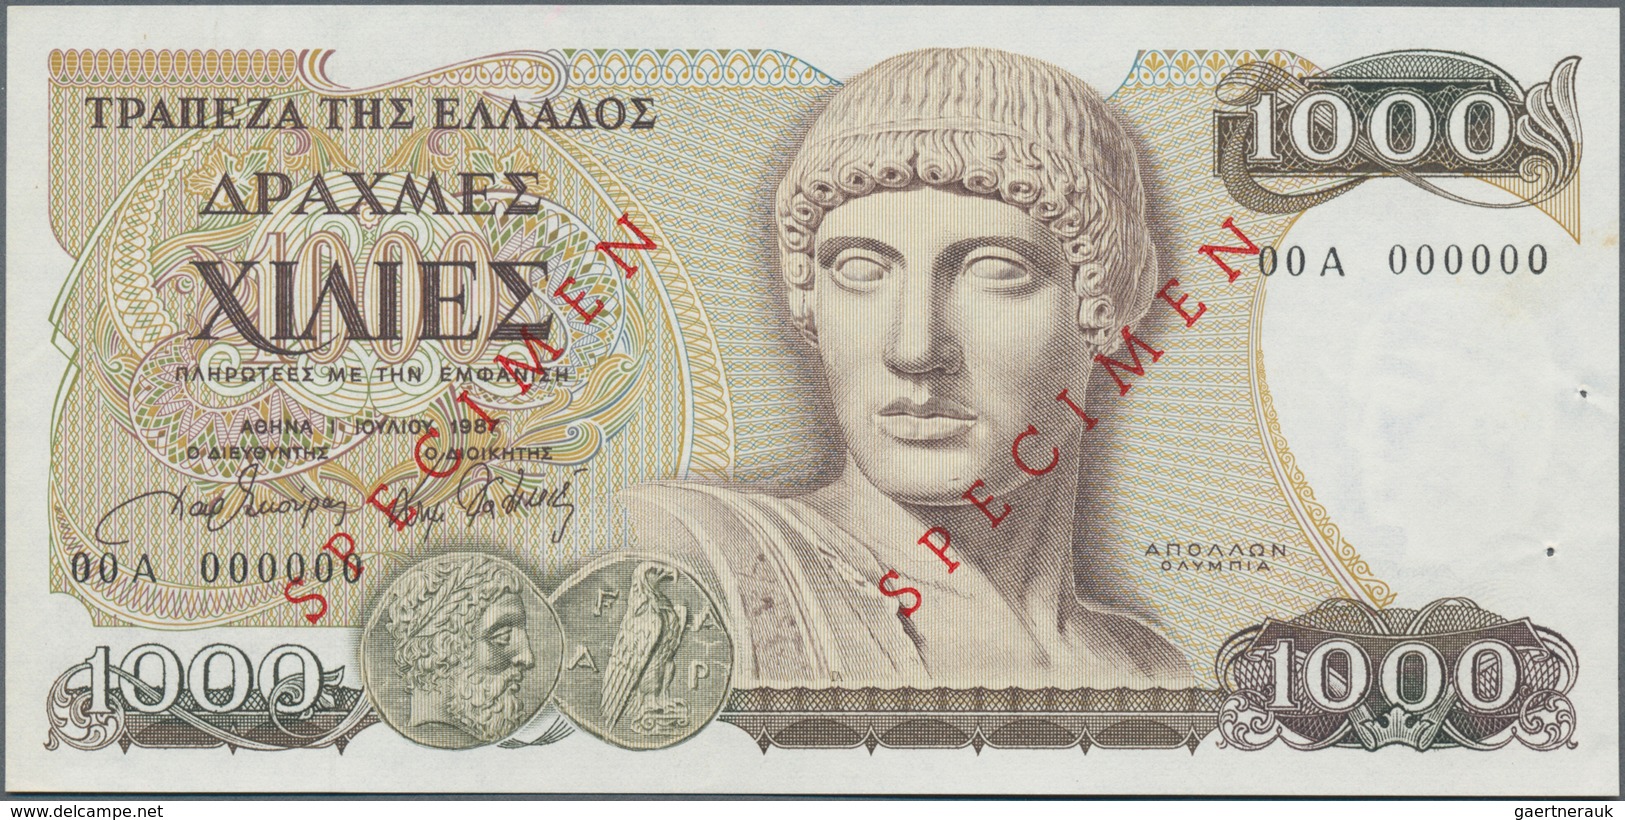 Greece / Griechenland: 1000 Drachmai 1987 SPECIMEN, P.202s, Serial Number 00A 000000 And Red Overpri - Grecia